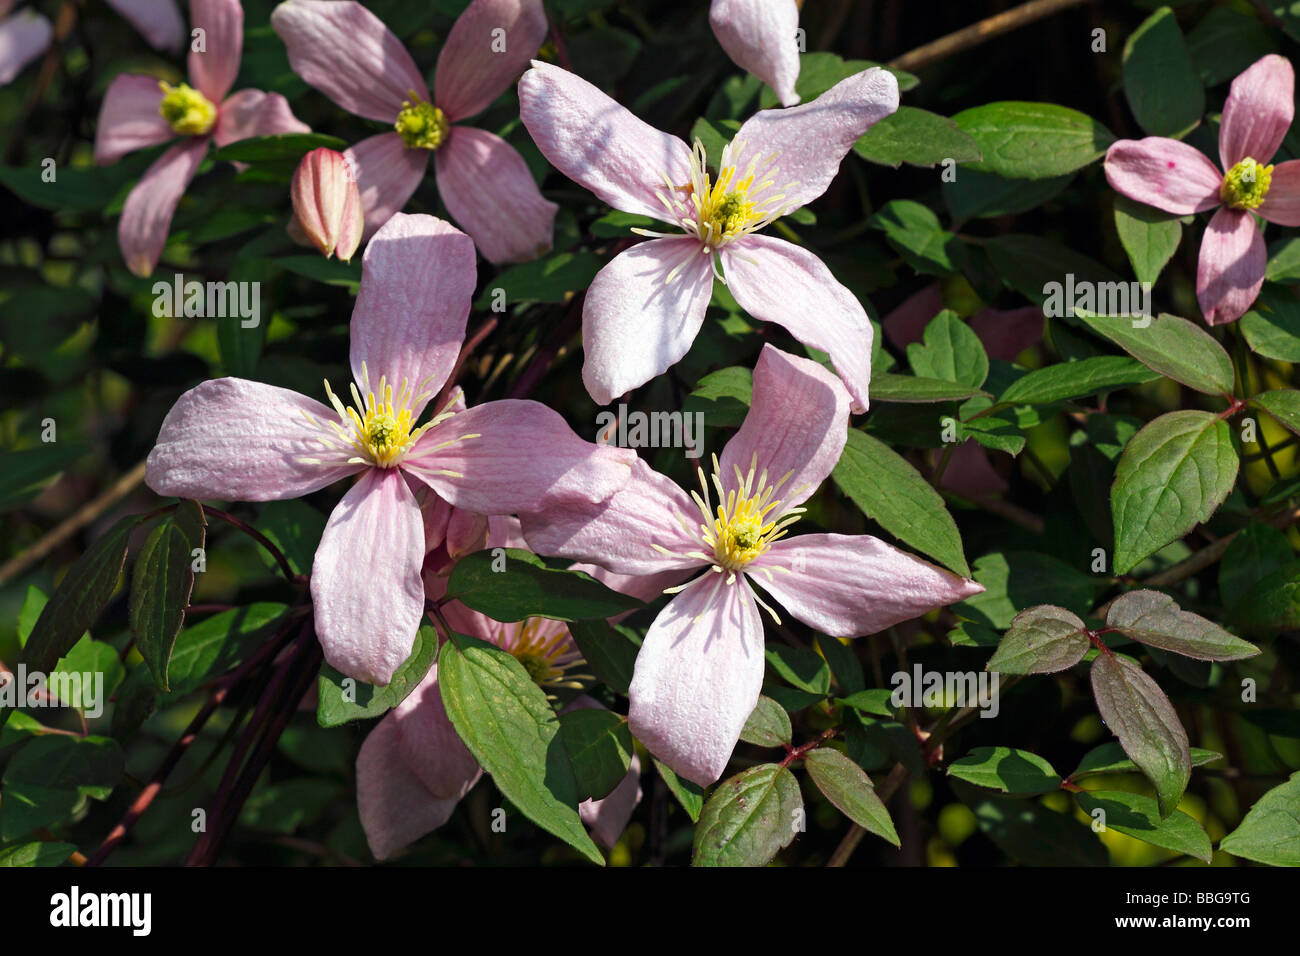 Fioritura la clematide cultivar Spooneri Rosea (Clematis Spooneri ibrido rosea) pianta rampicante Foto Stock